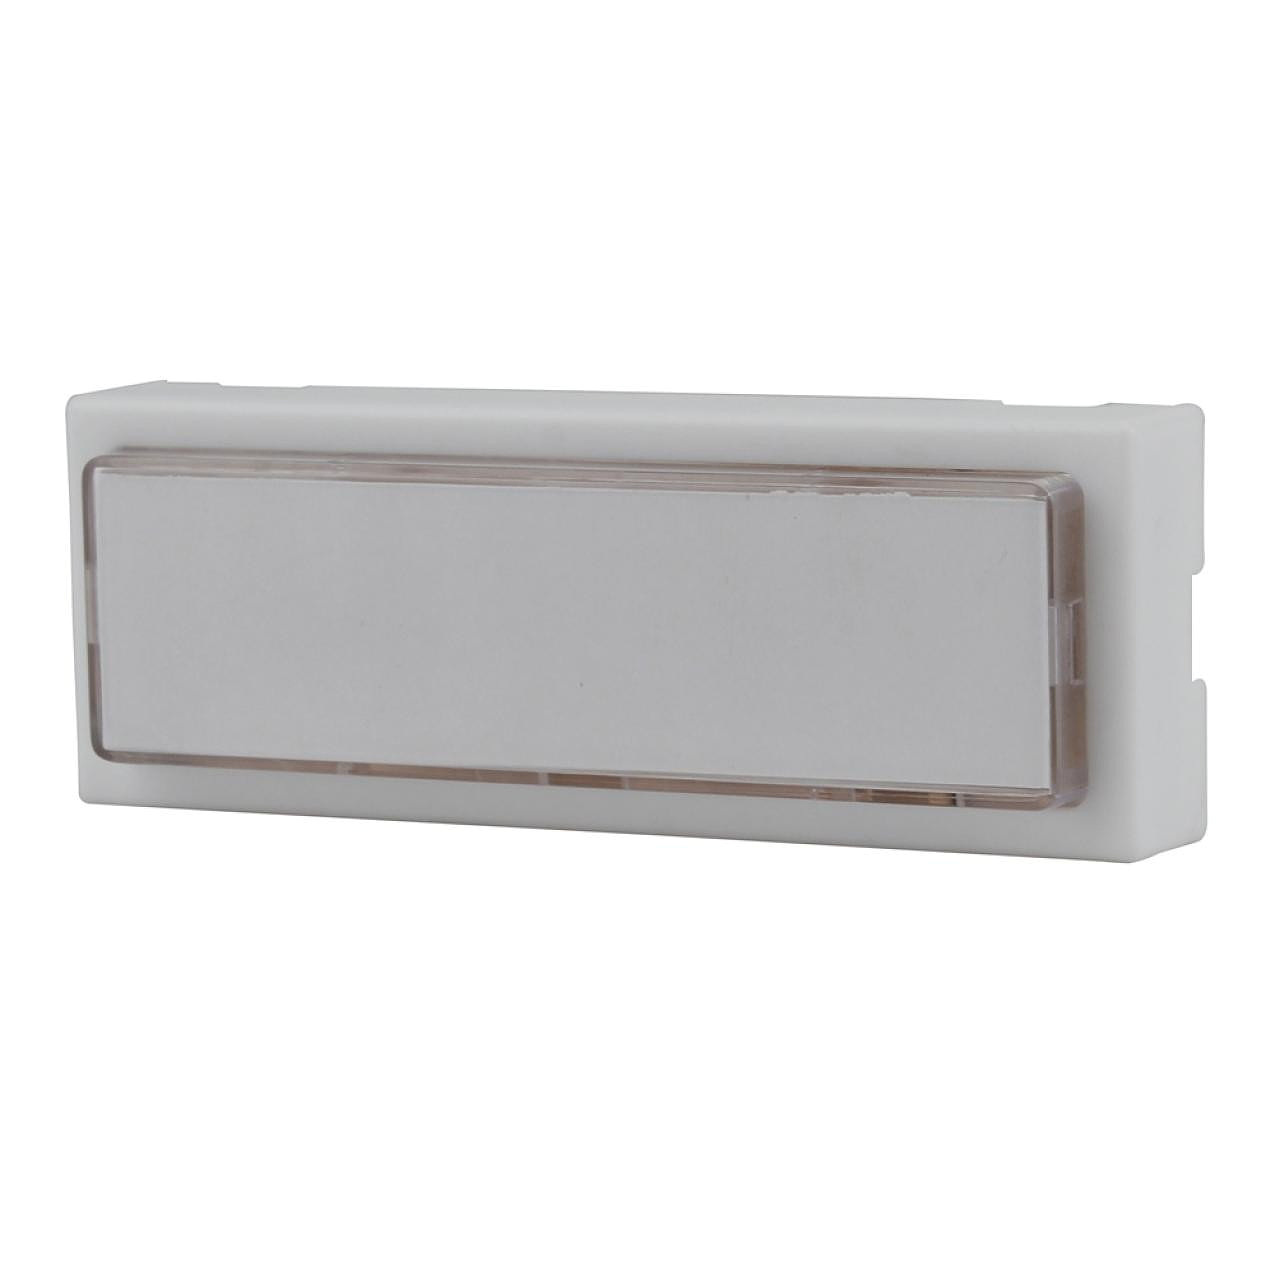 uniTEC Klingeltaster 1-teilig, Weiß, Kunststoff, beleuchtet